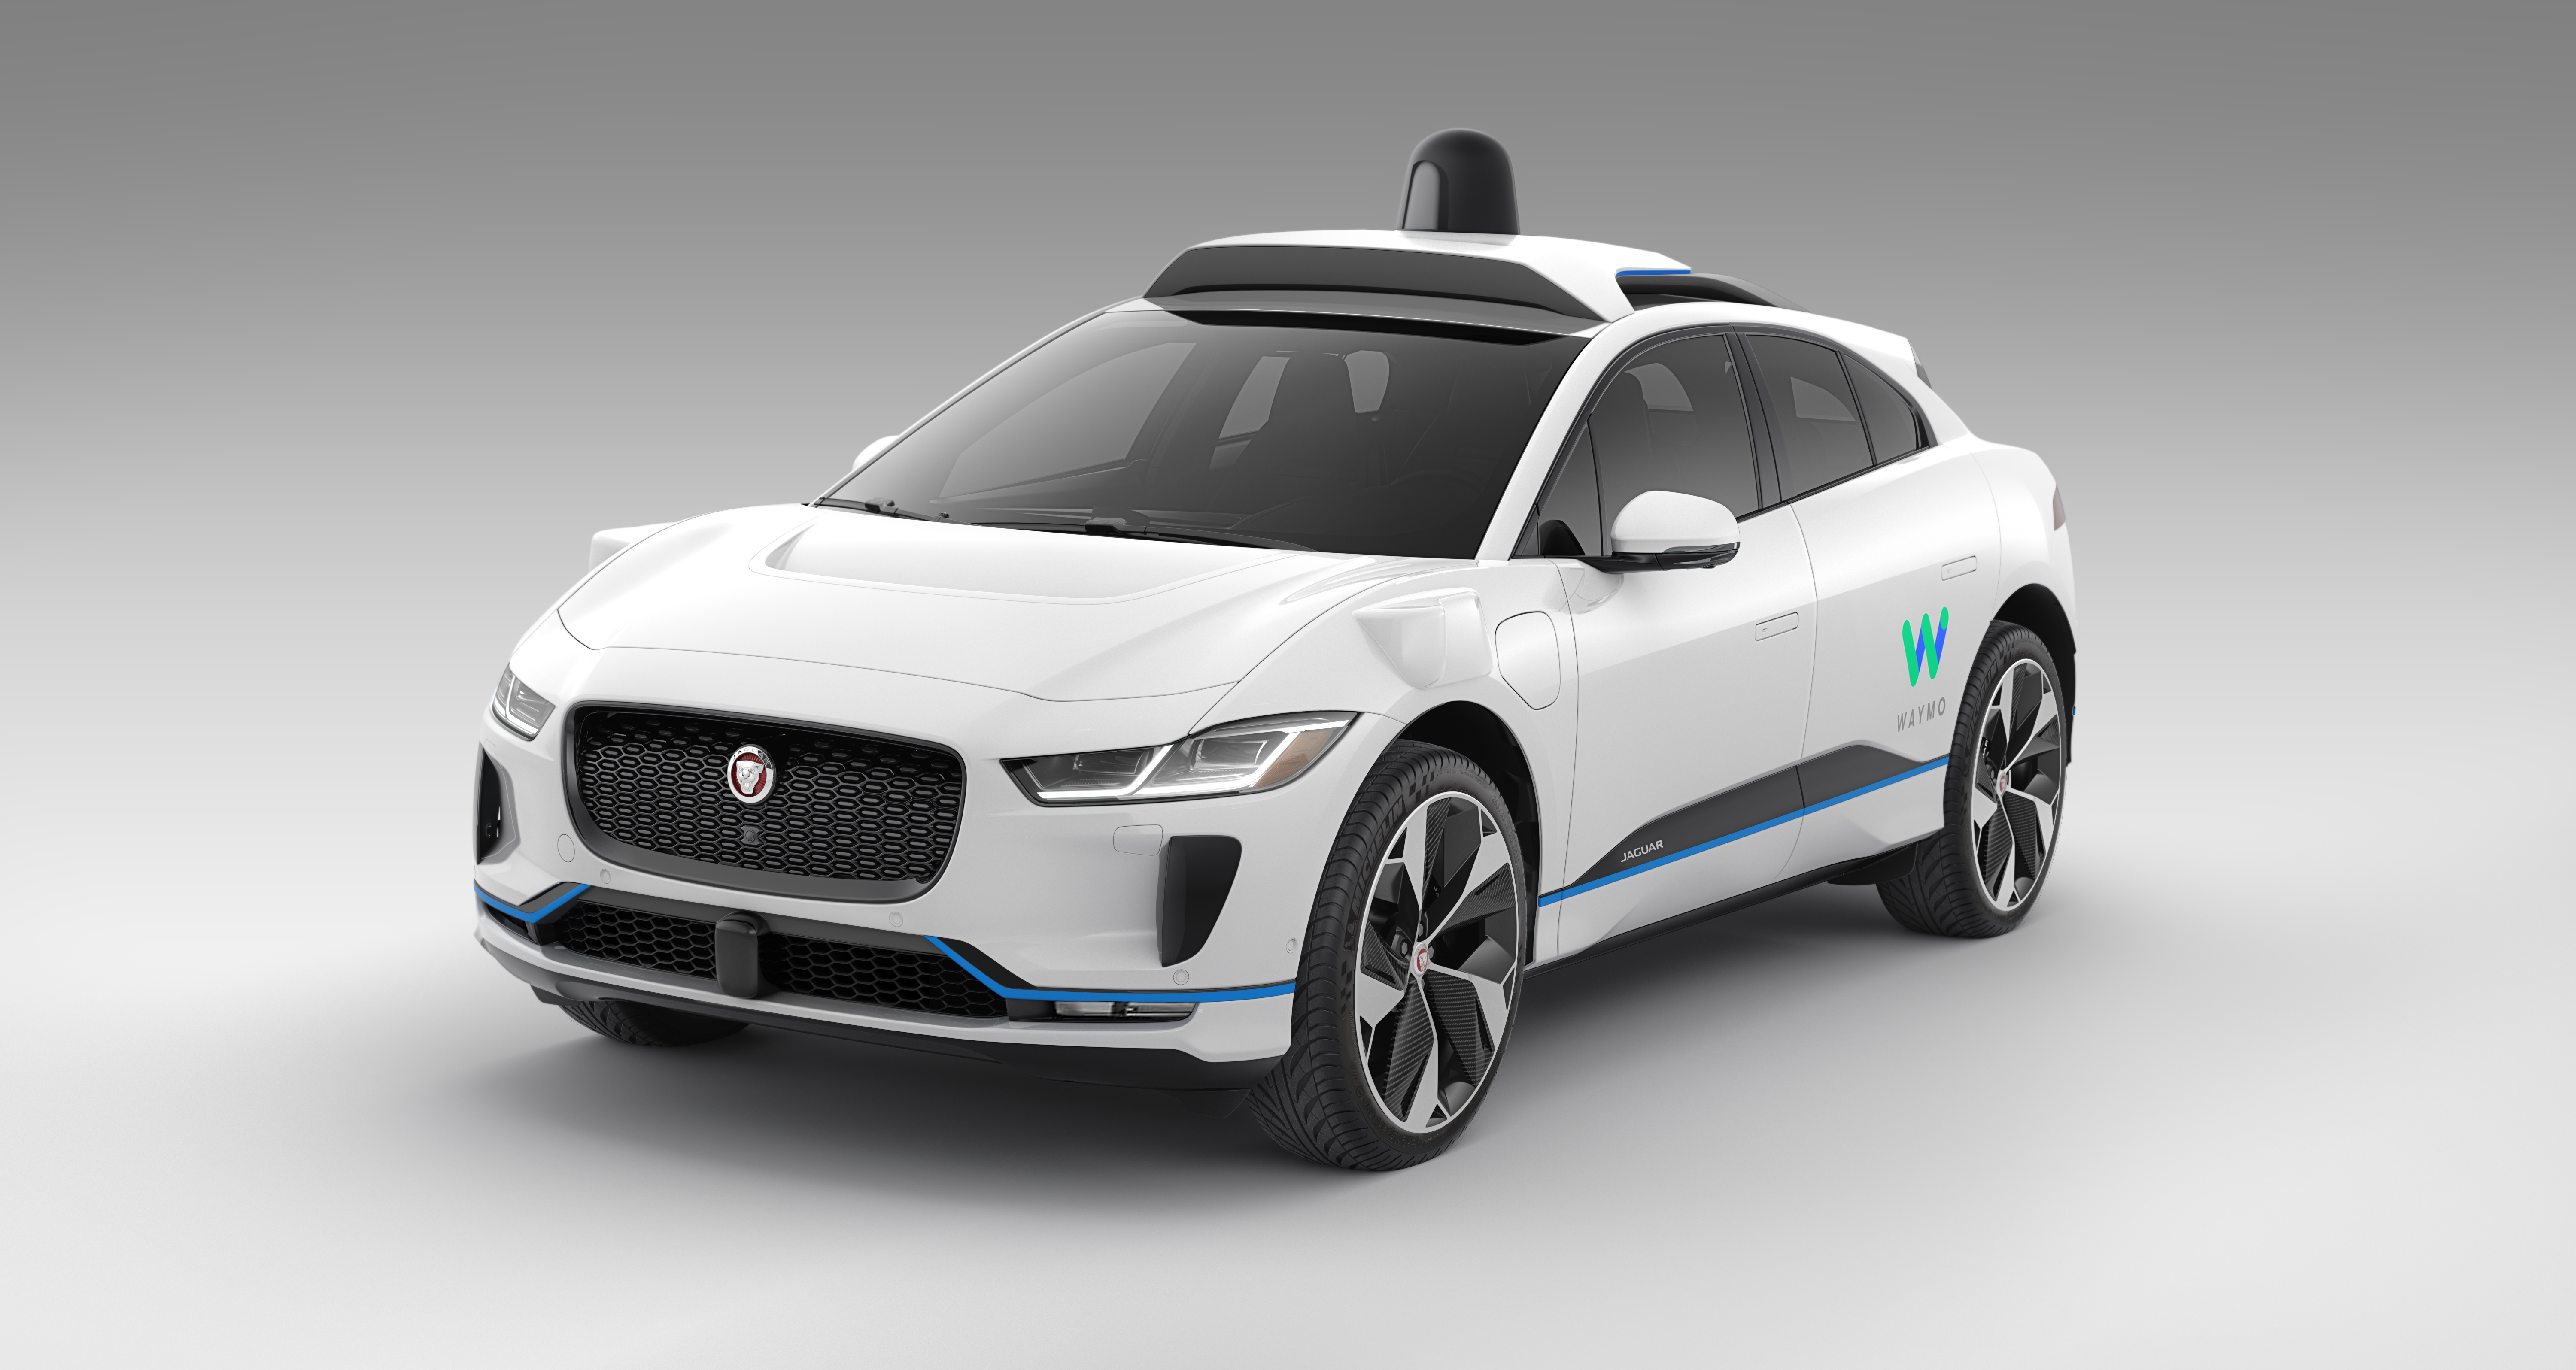 Waymo's self-driving Jaguar I-Pace electric SUV 1 (Source: Waymo)